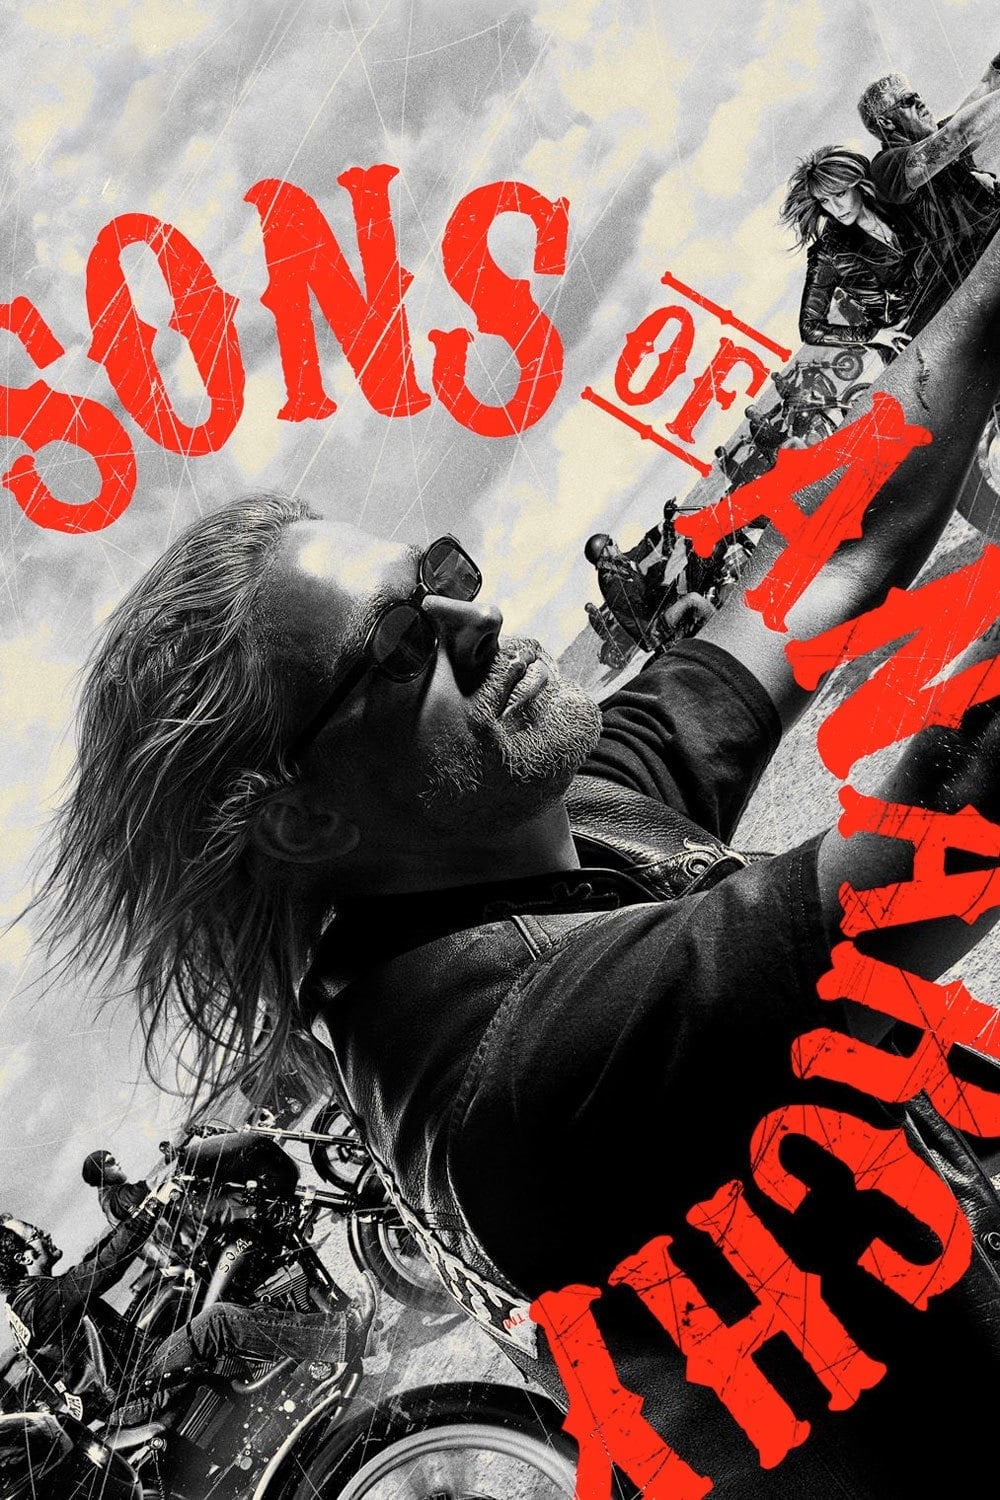 Sons of Anarchy (2008 - 2014) Seizoen 1 Disc 2 BD50